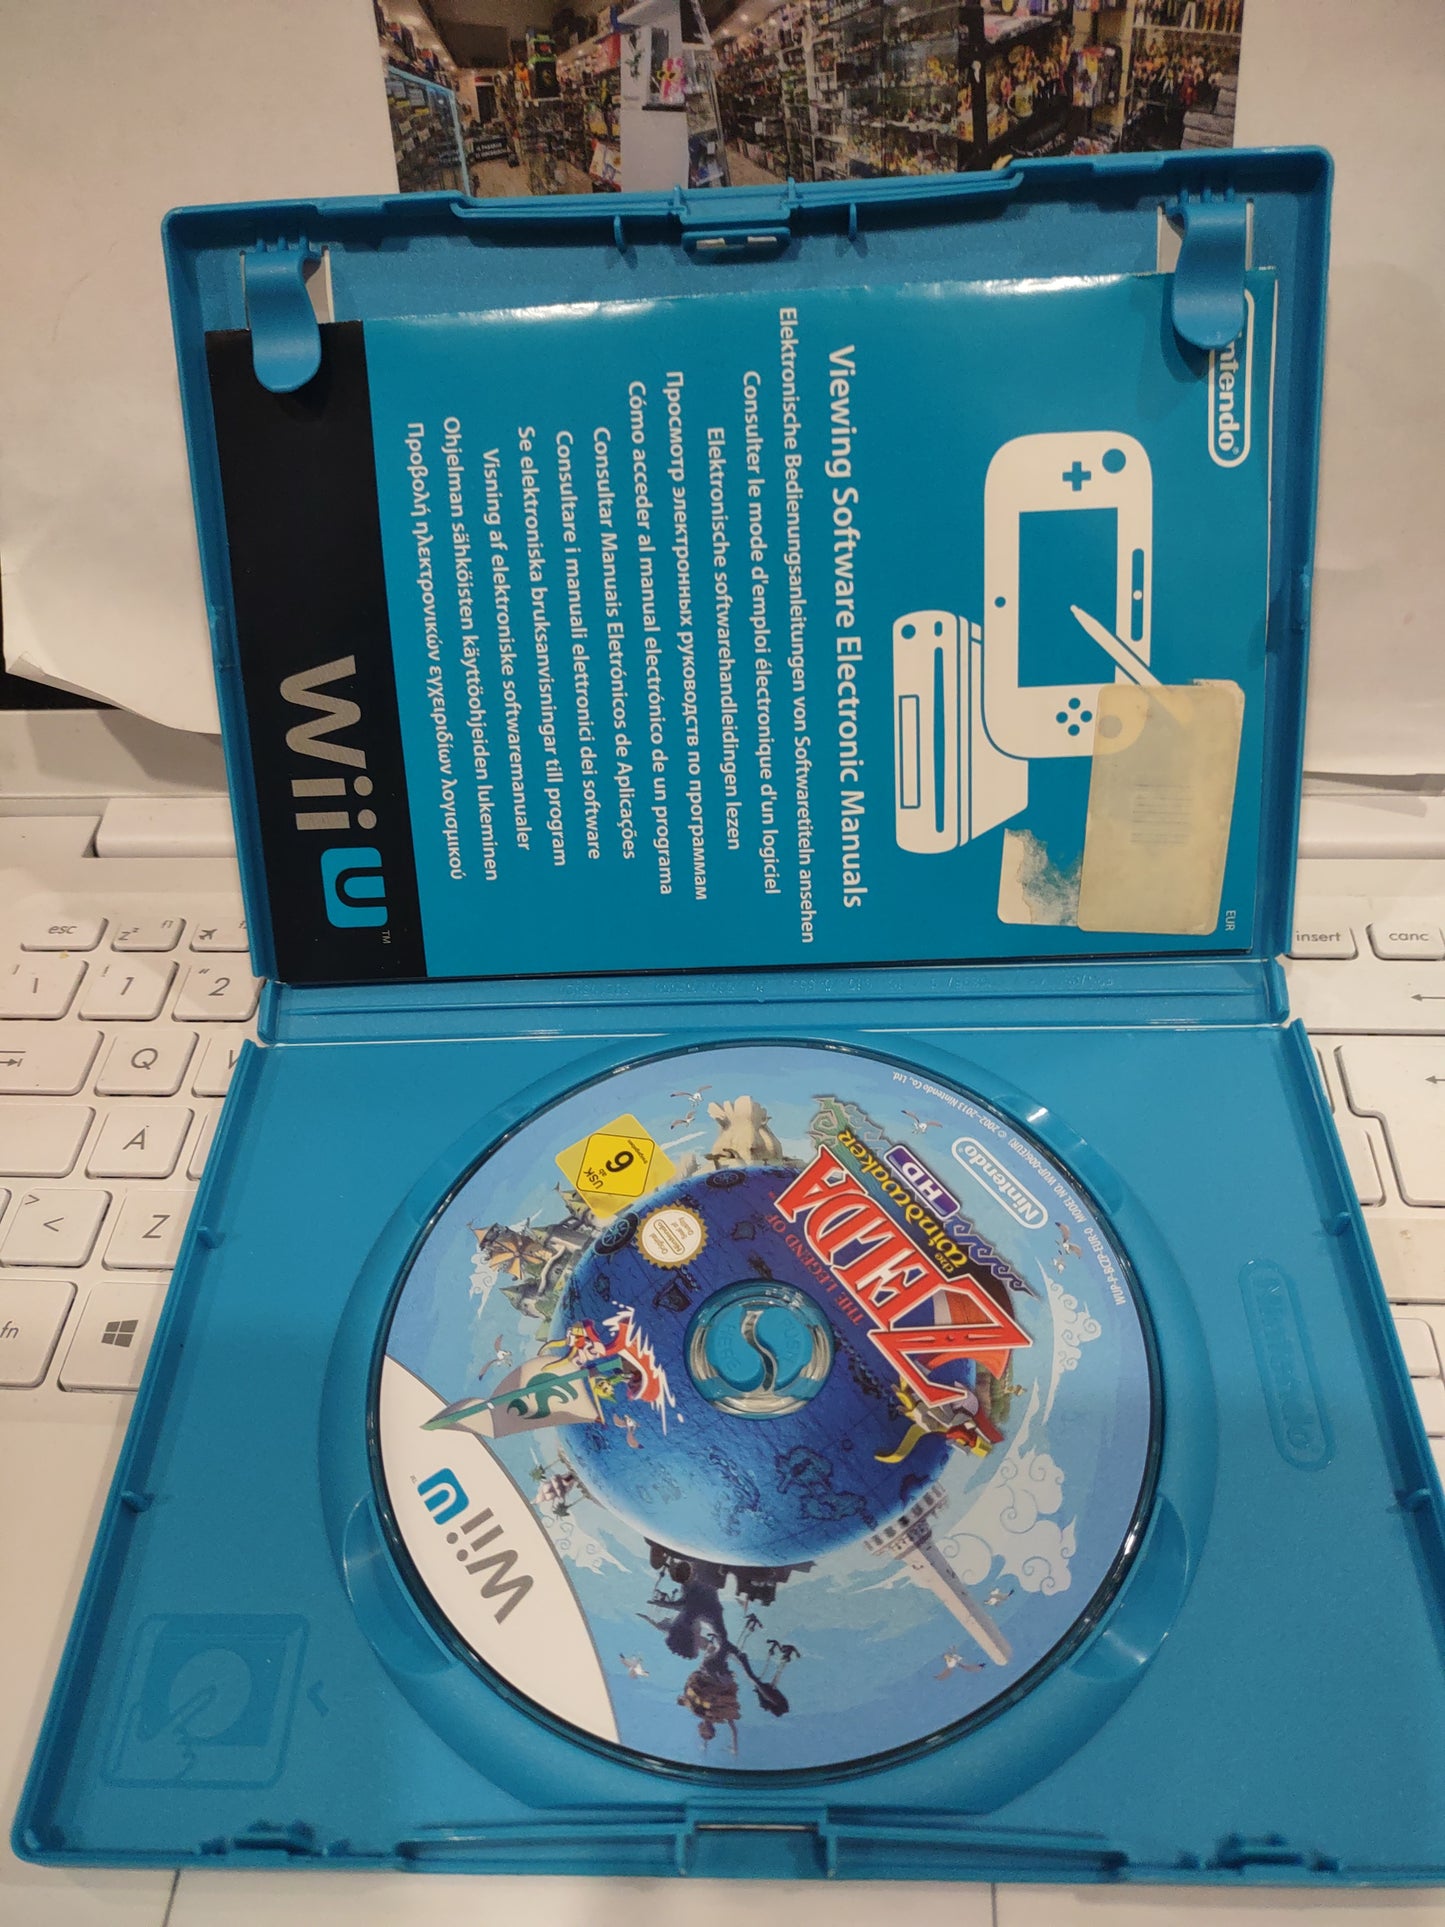 Gioco Nintendo Wii U the Legend of Zelda the windwaker HD